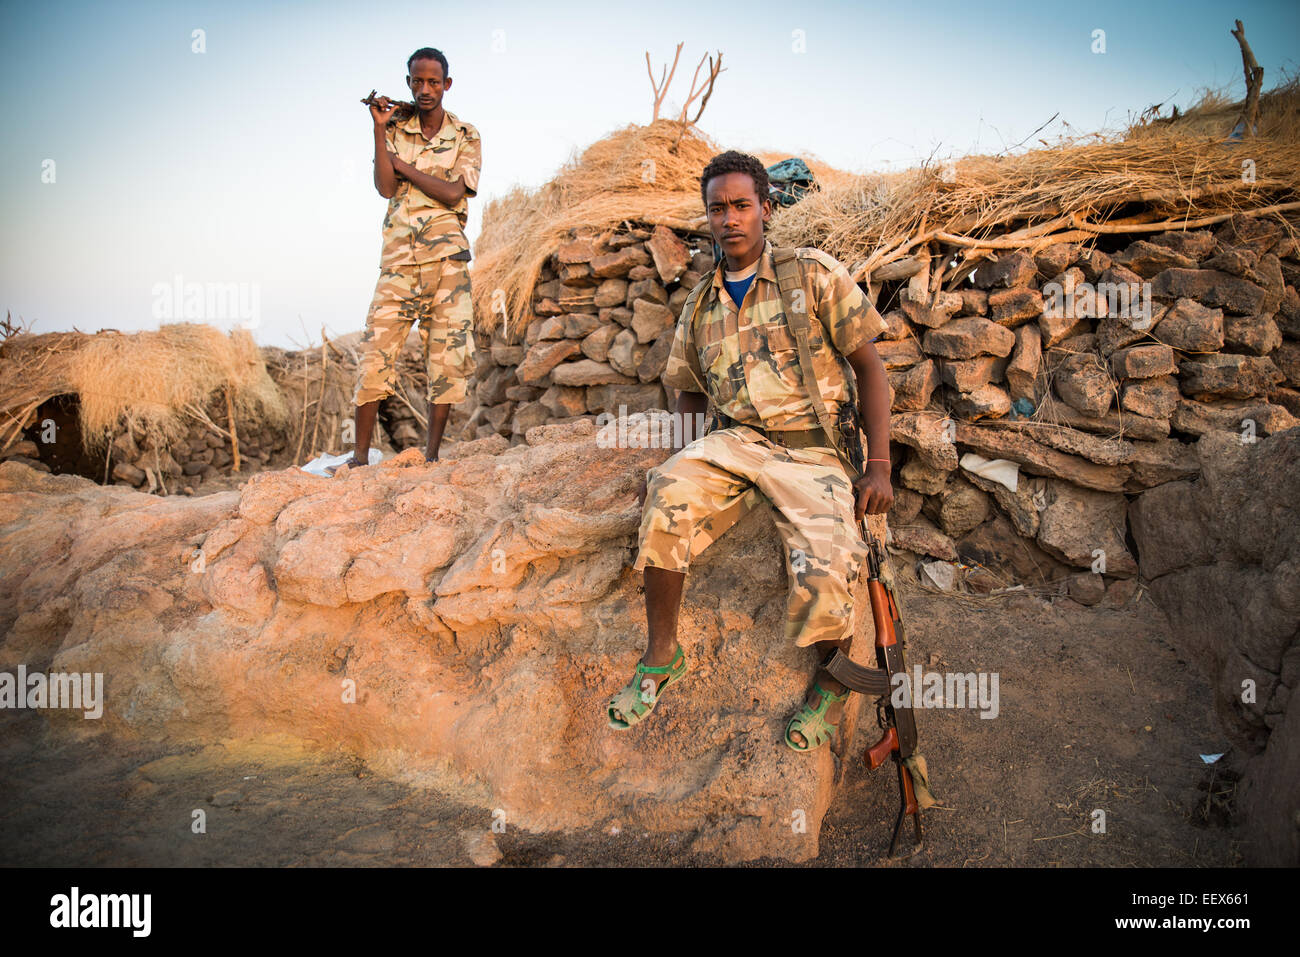 Army men in the village, Danakil depression, Ethiopia, Africa. Stock Photo